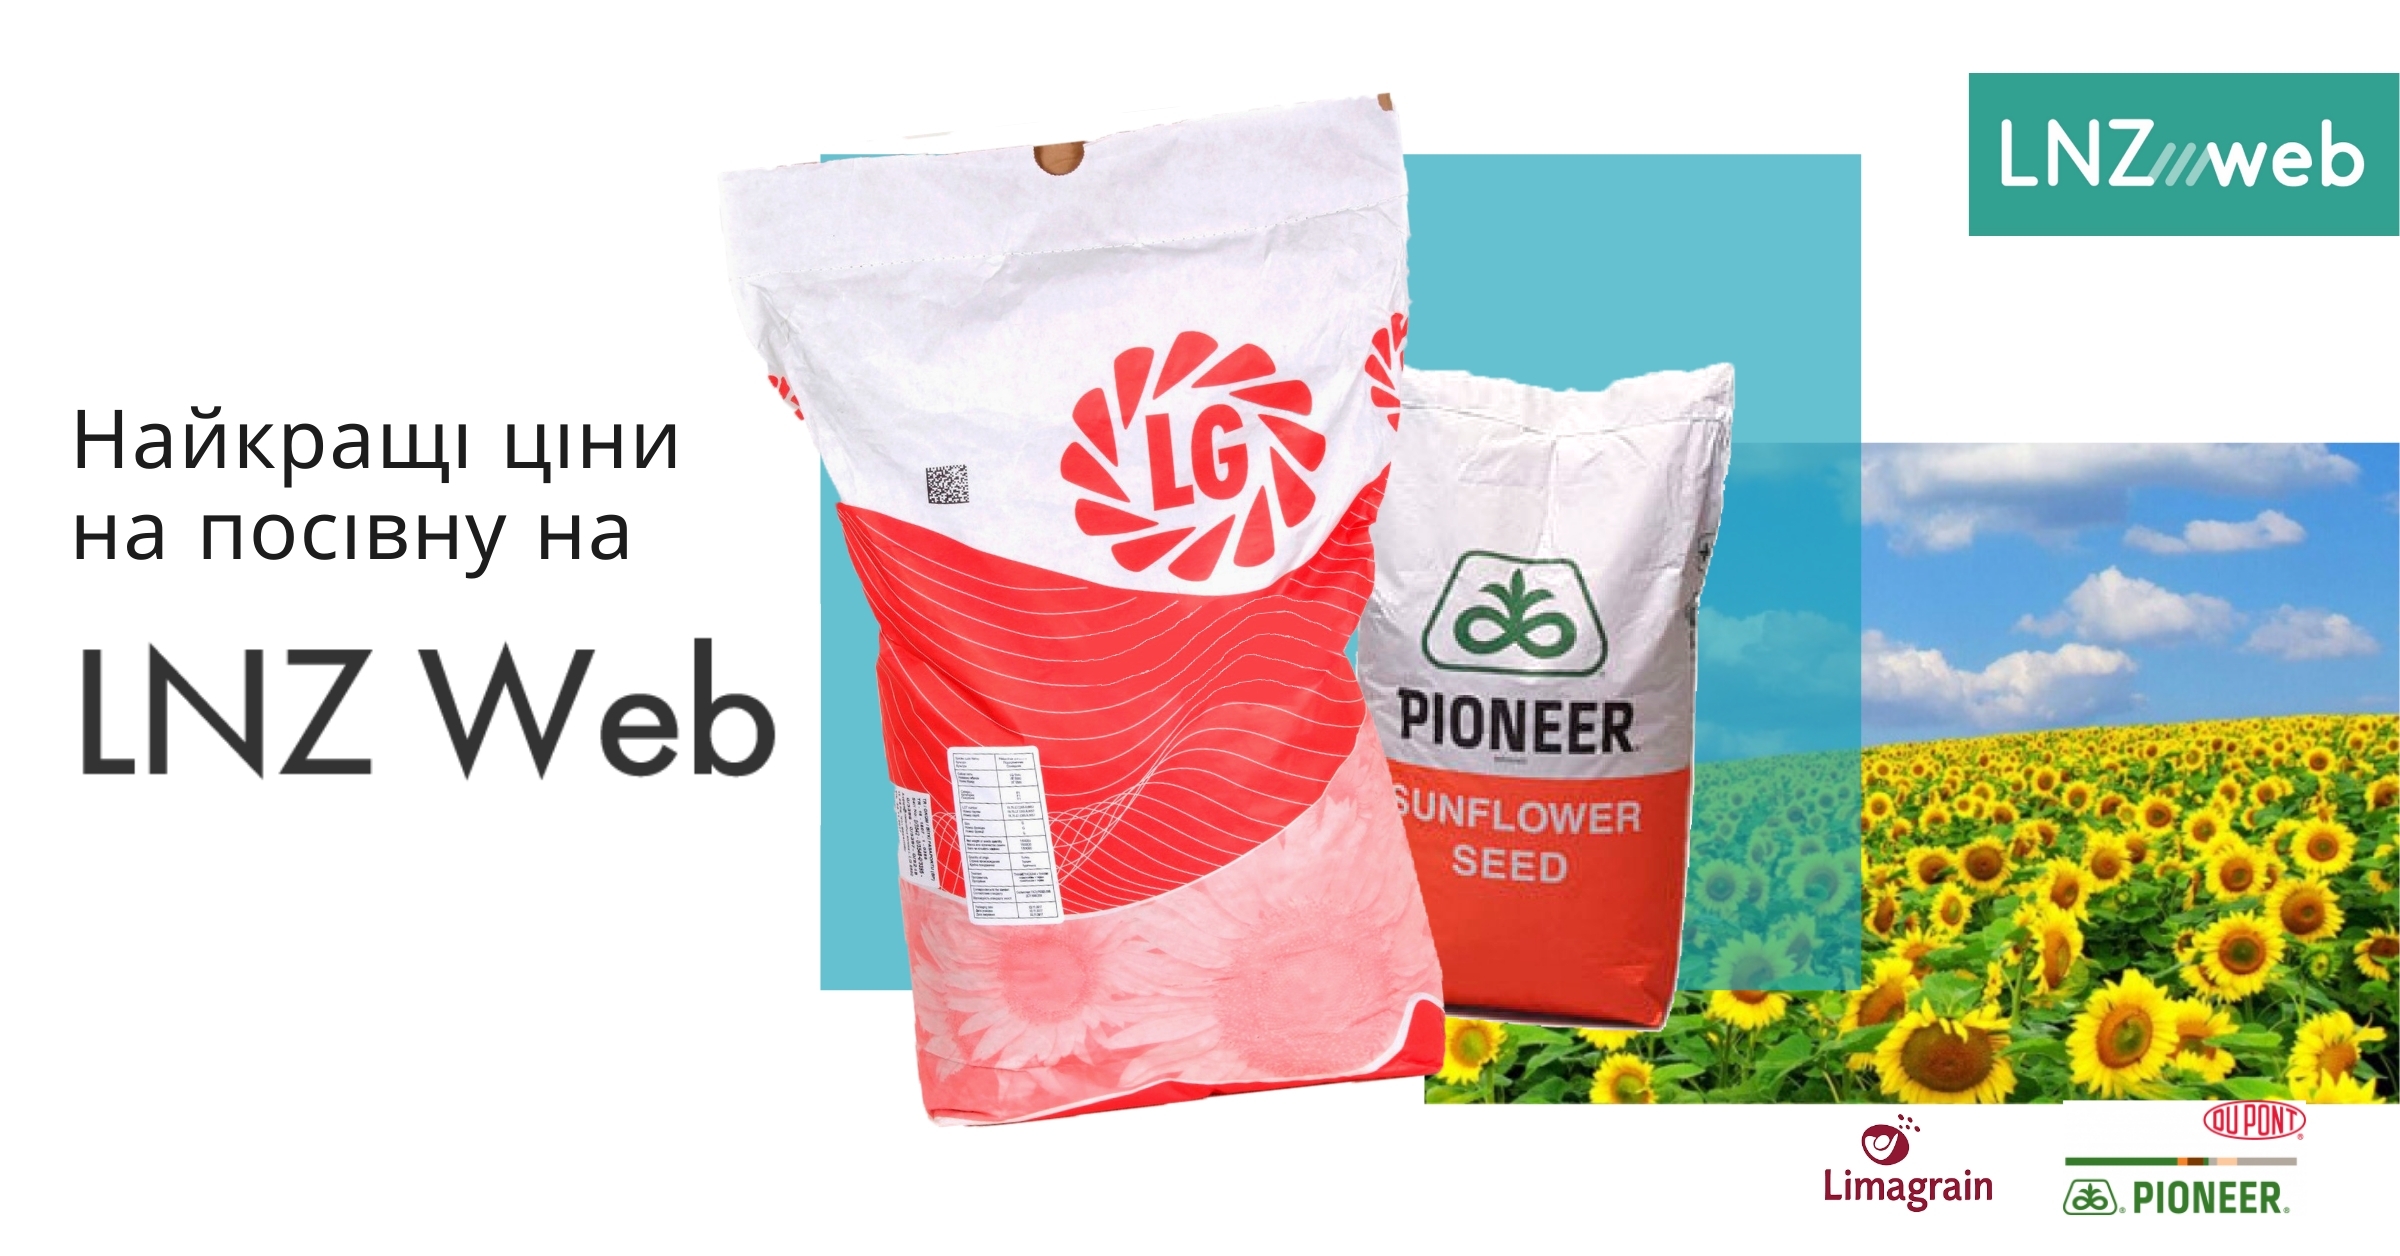 Акция на семена кукурузы и подсолнечника, брендов Limagrain и PIONEER